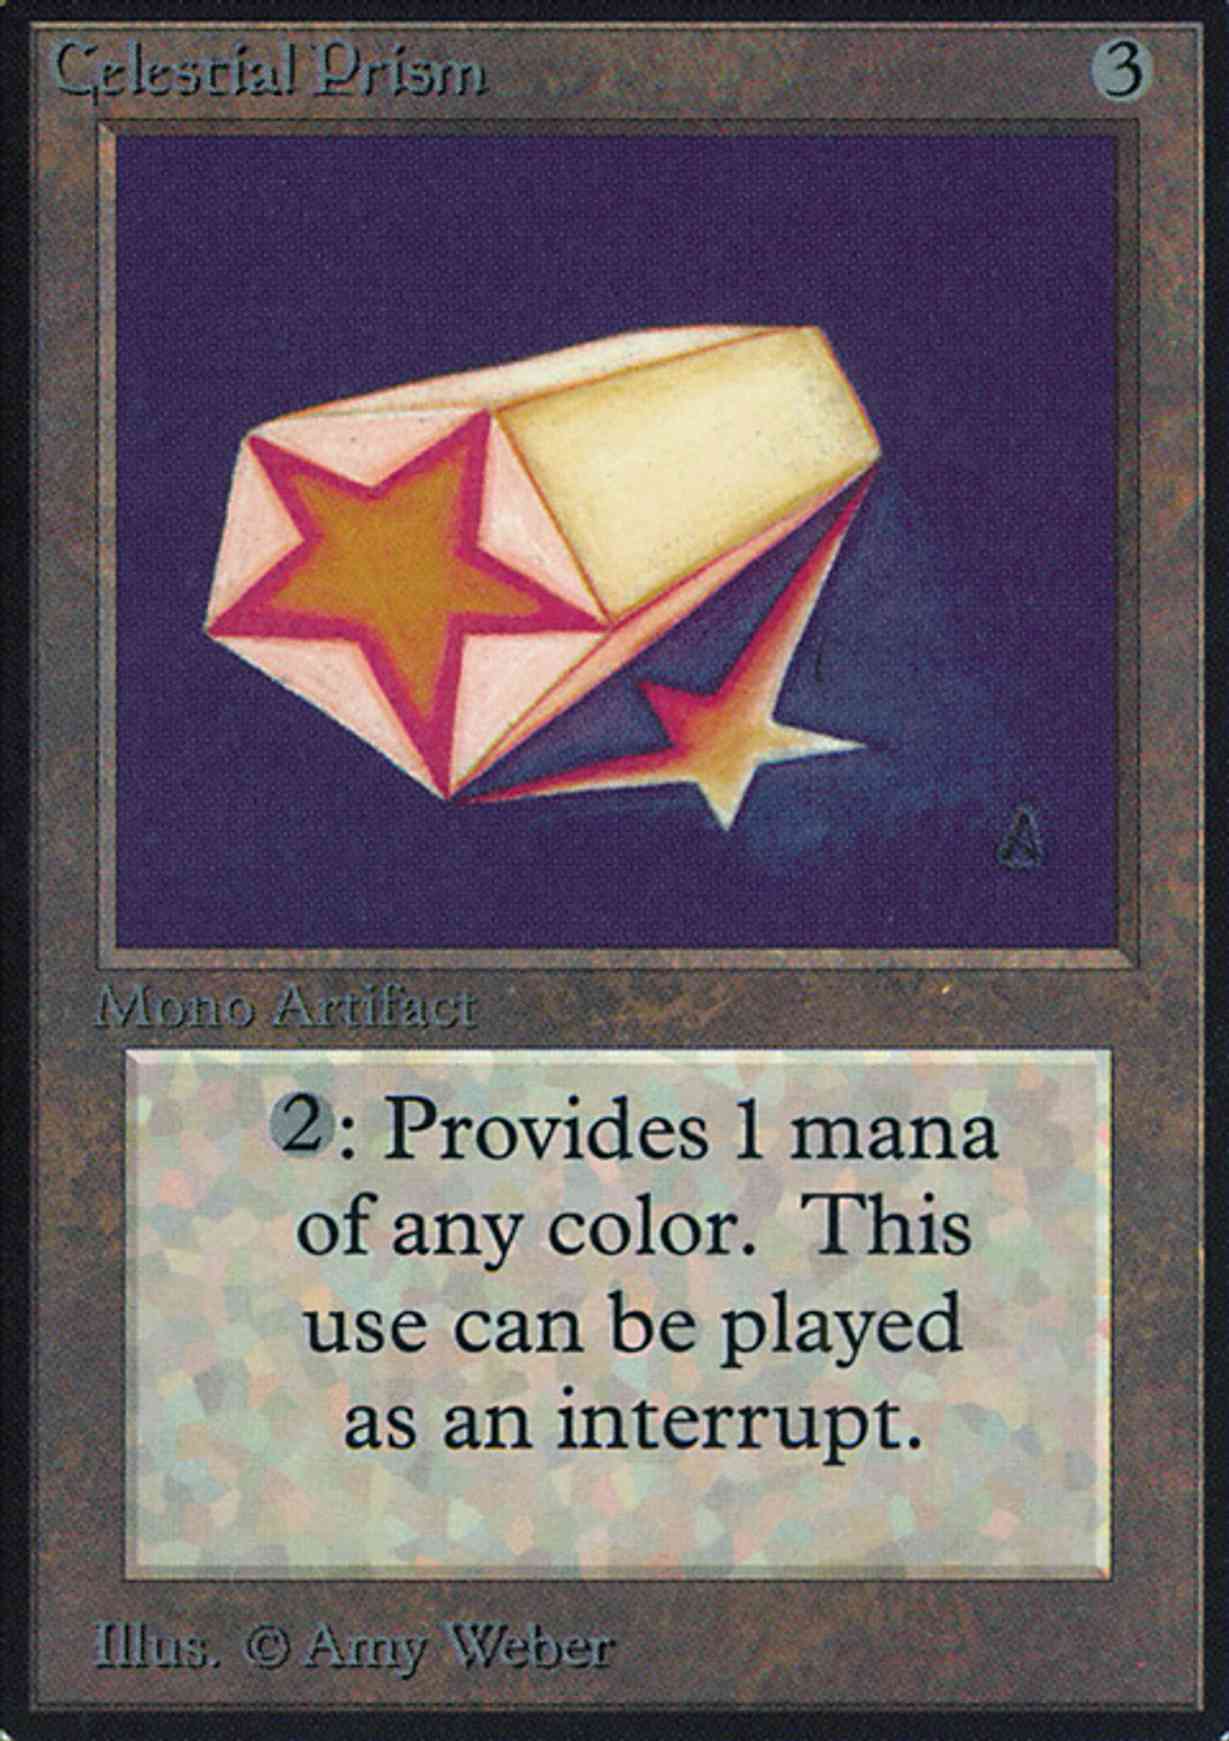 Celestial Prism magic card front